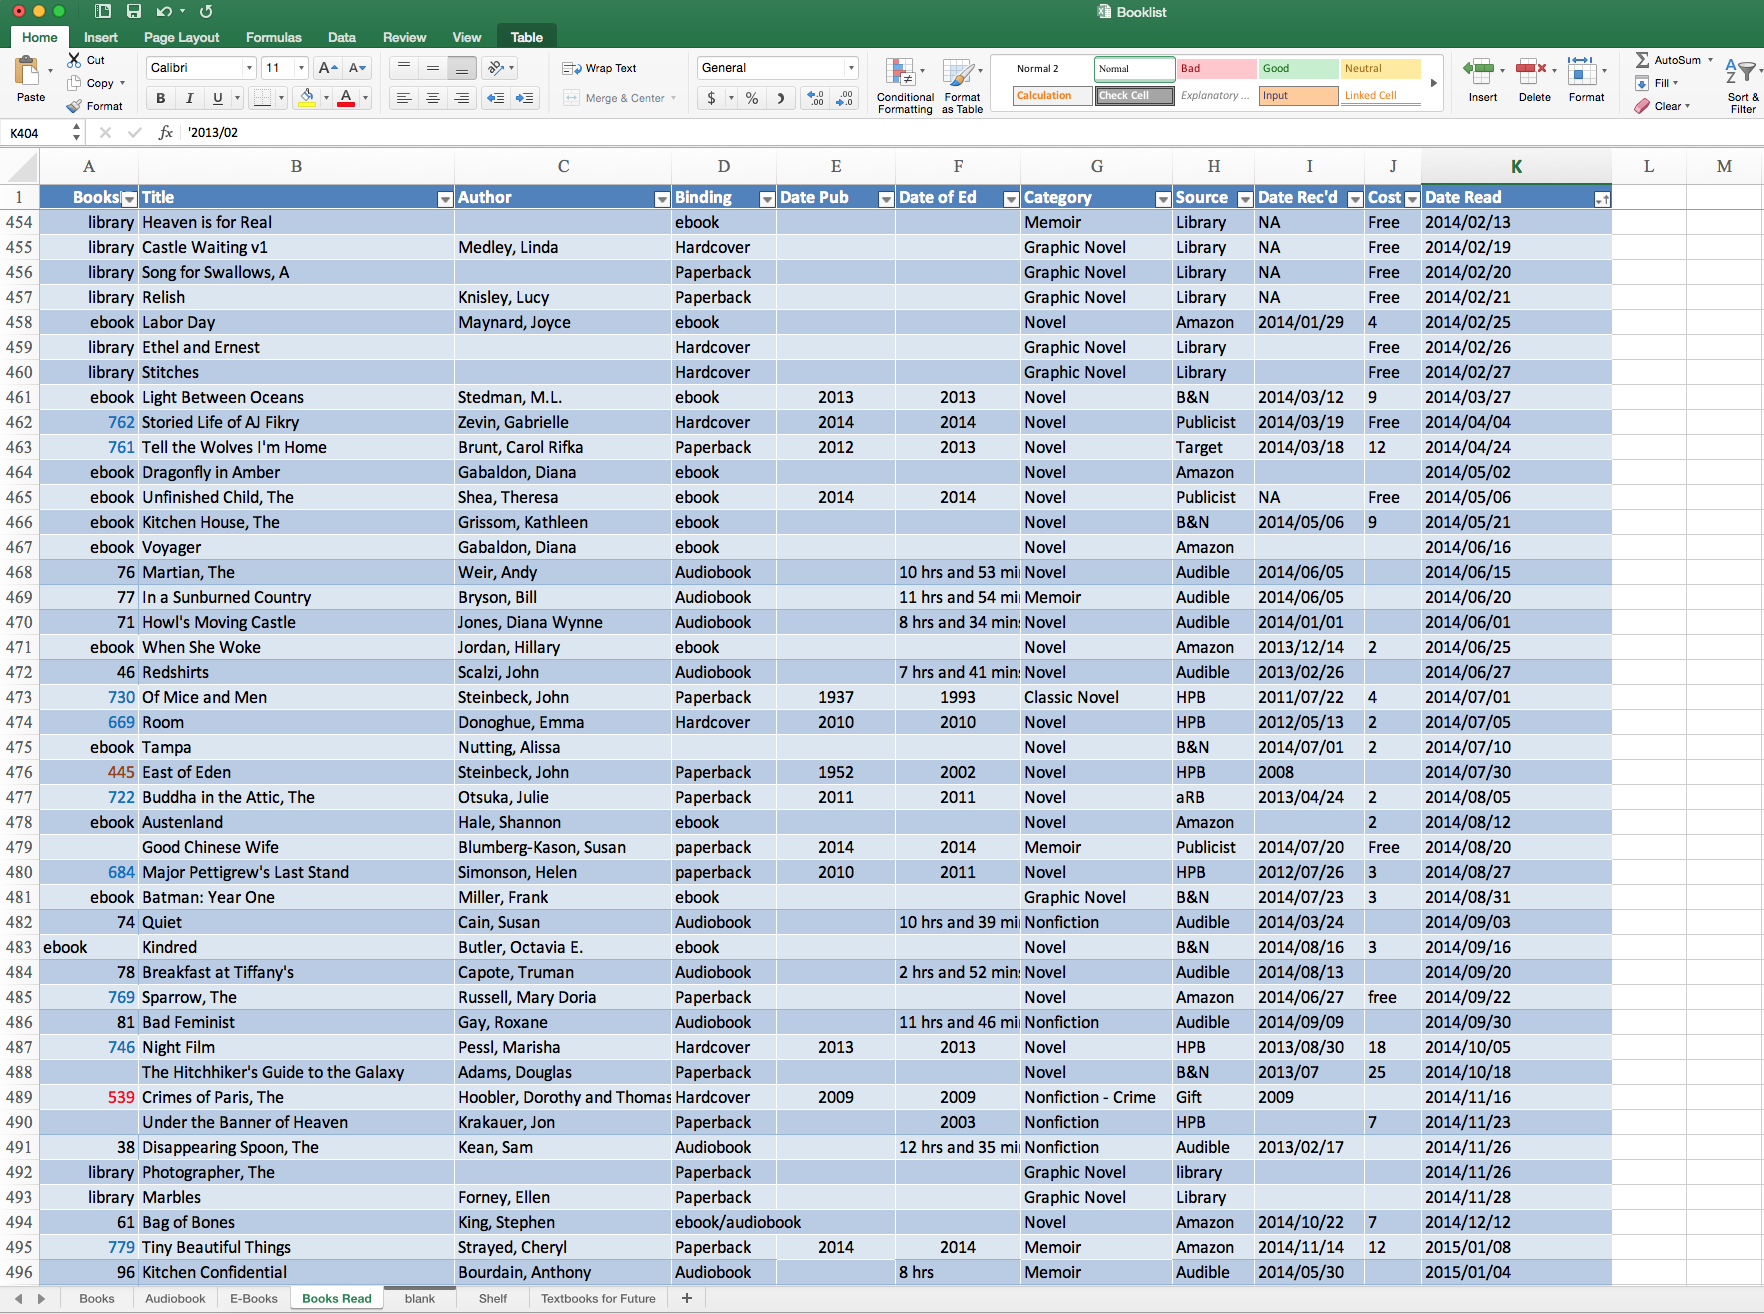 Movie Database Spreadsheet In Book Catalog Spreadsheet